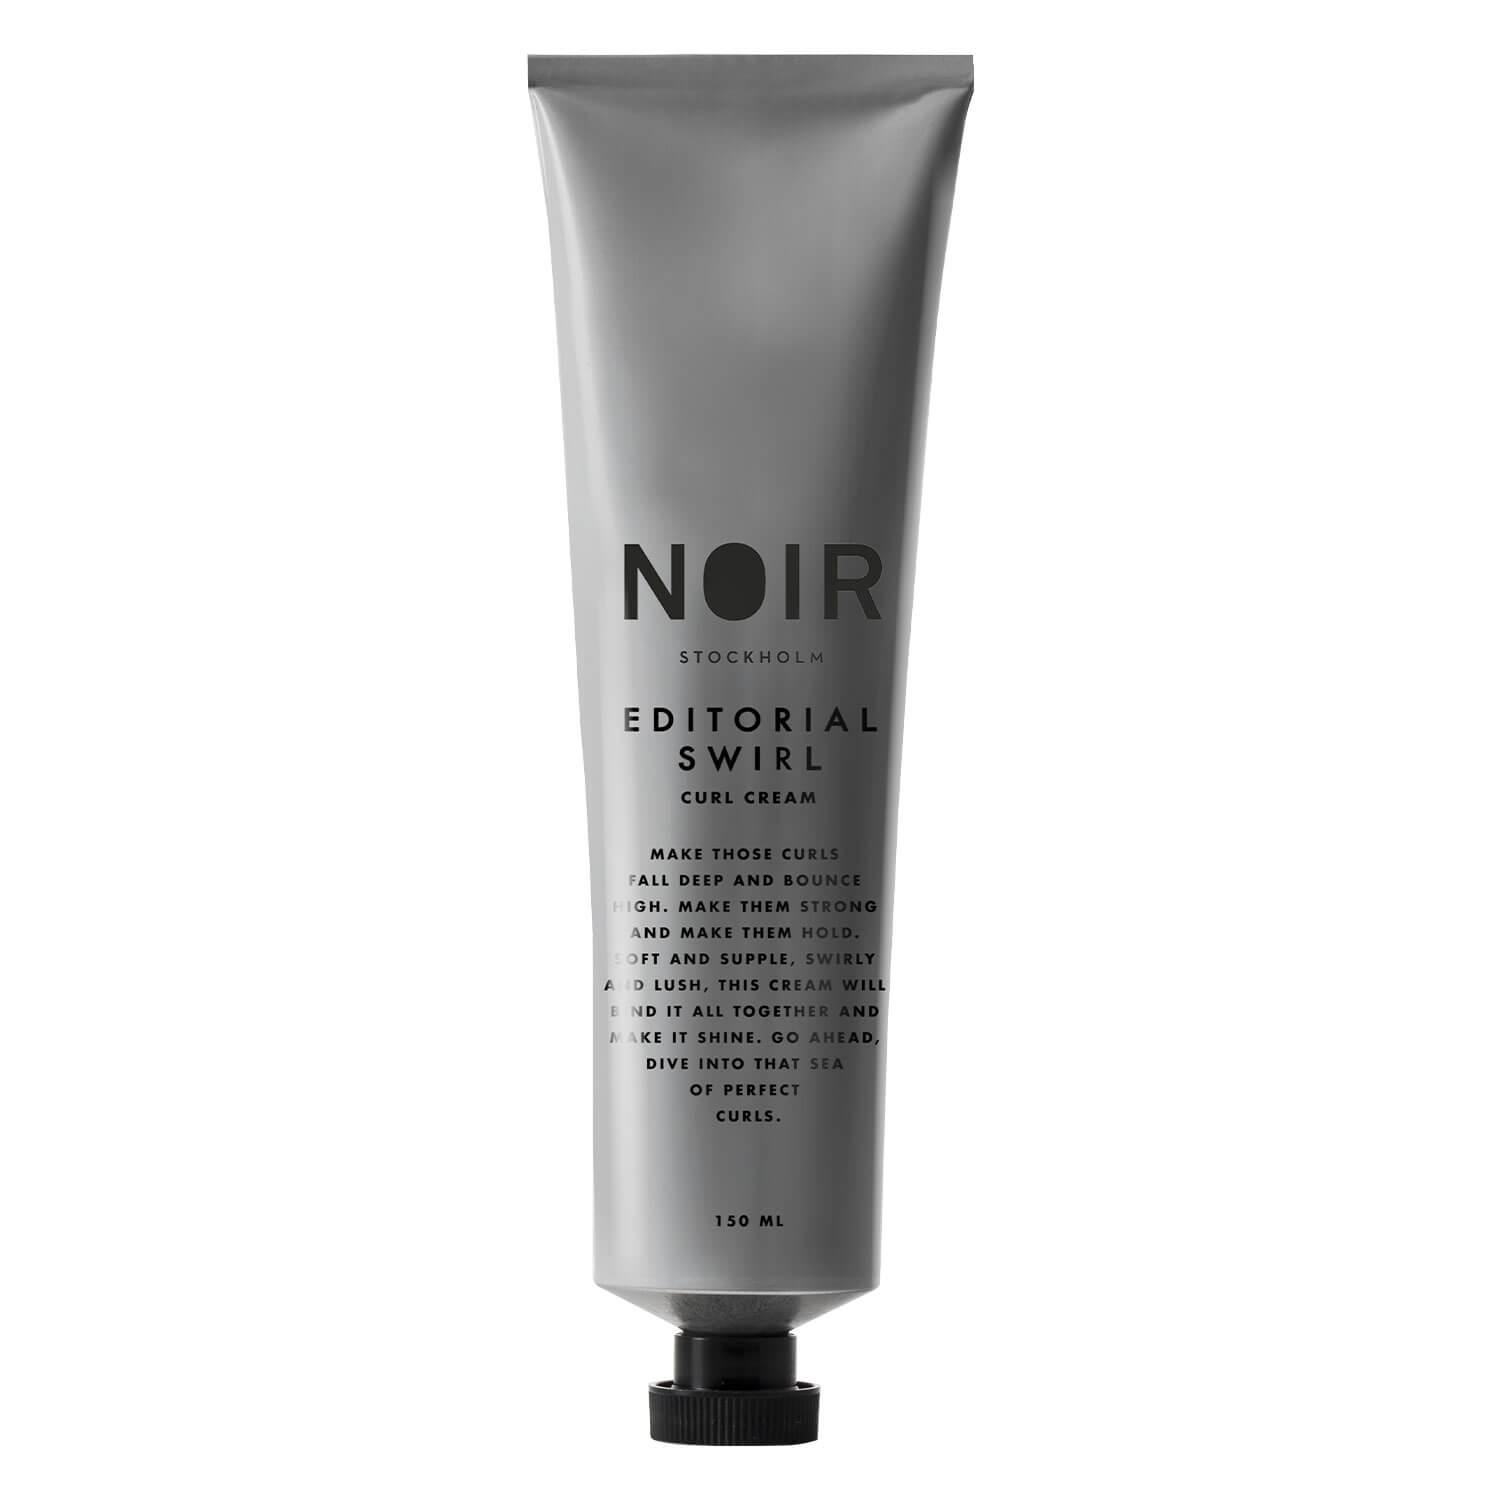 NOIR - Editorial Swirl Curl Cream